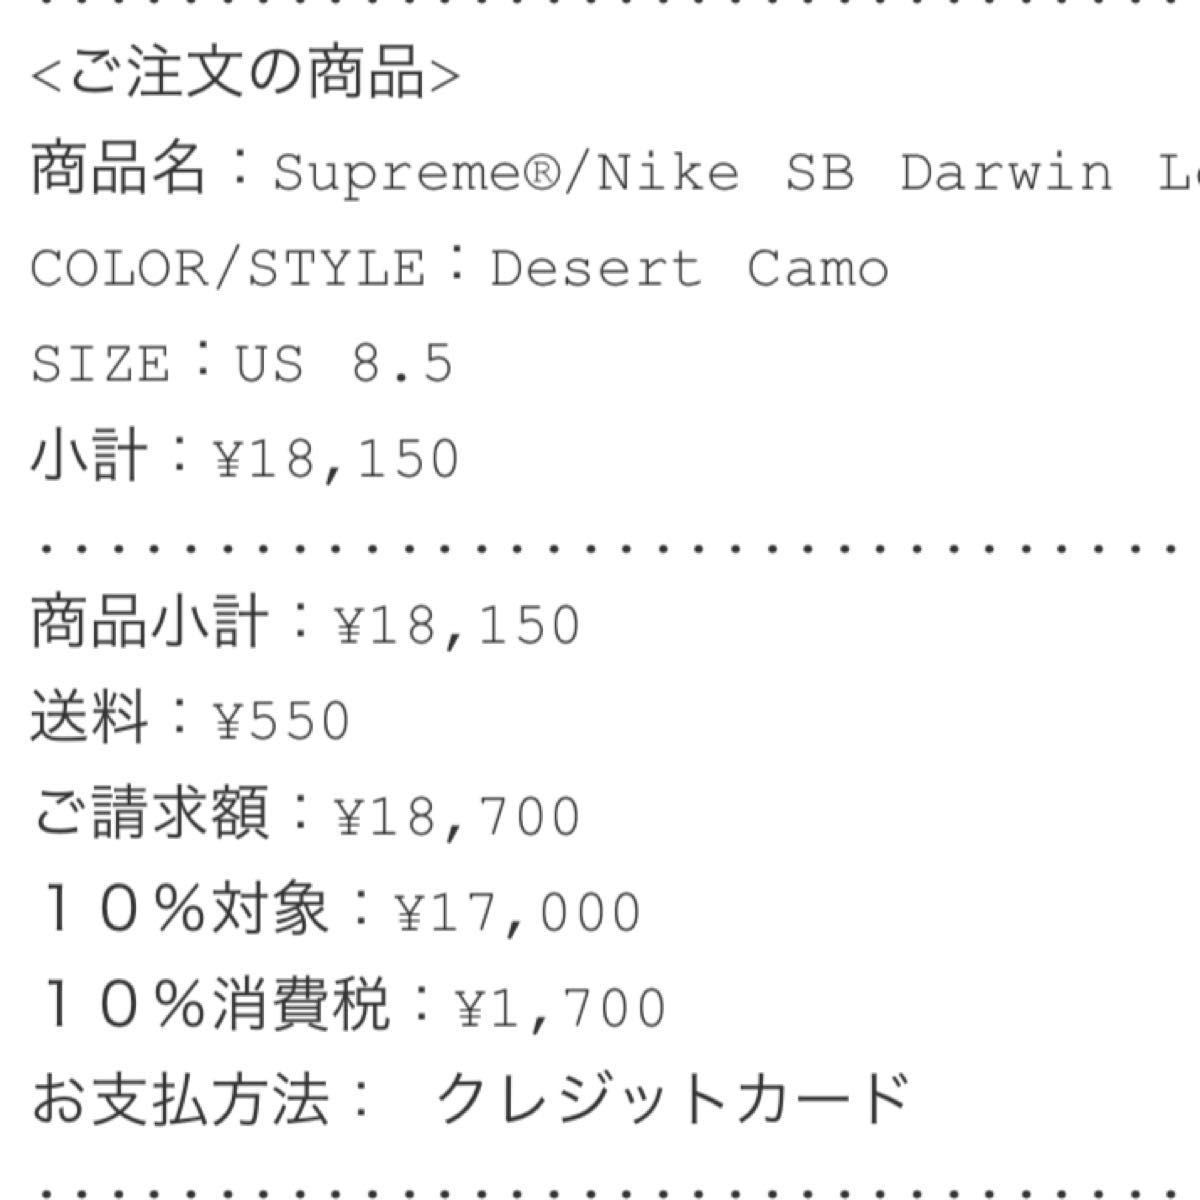 Supreme × Nike SB Darwin Low "Desert Camo"